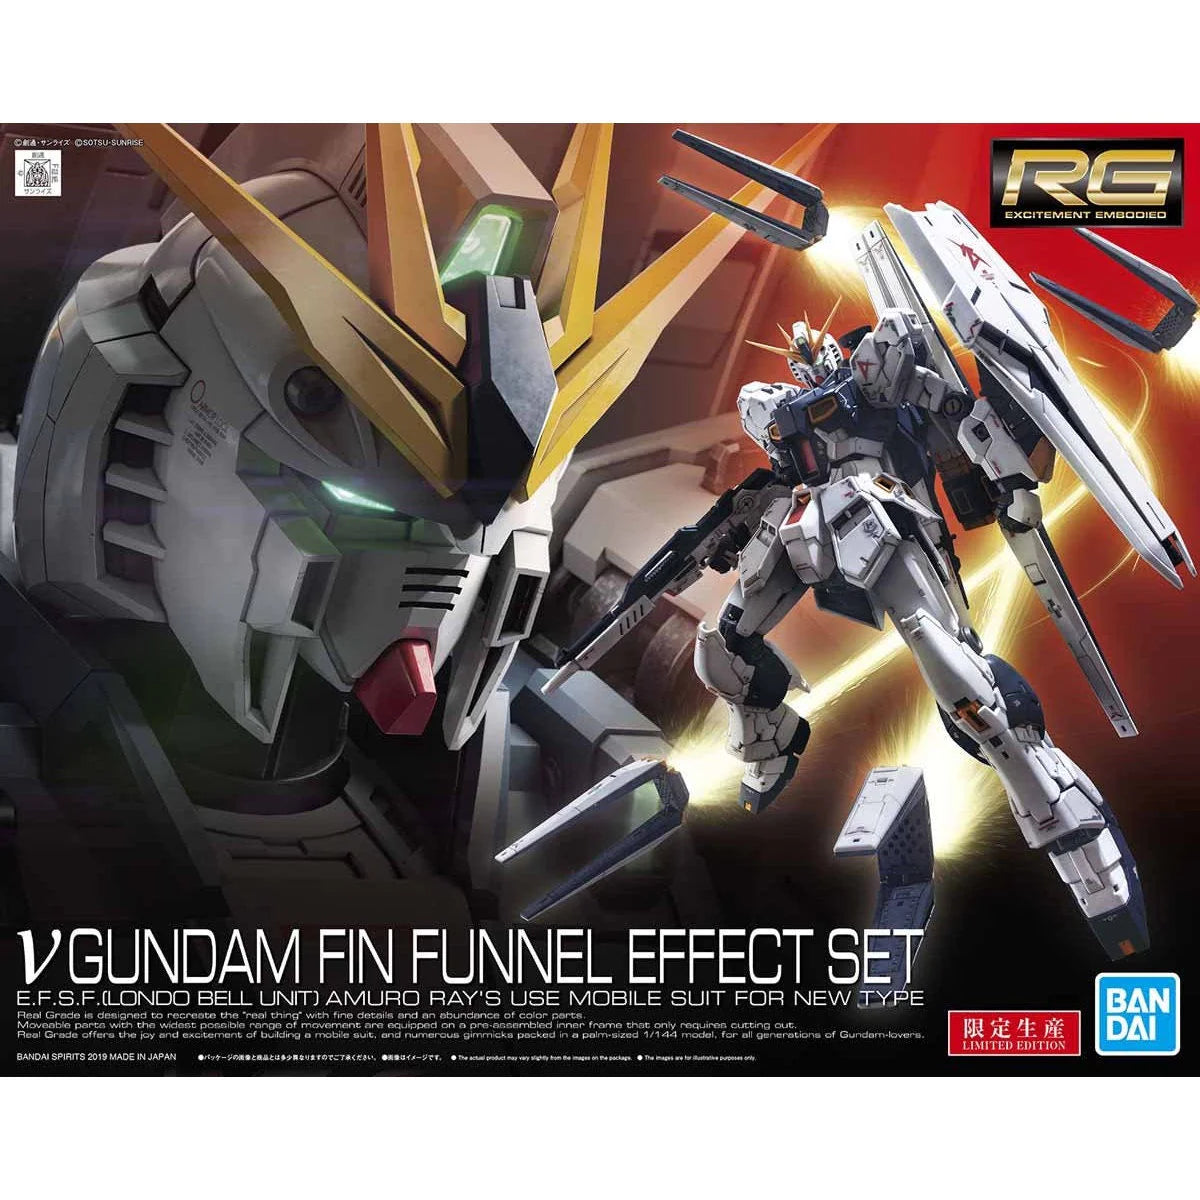 RG Nu Gundam Finn Funnel Effect Set 1/144